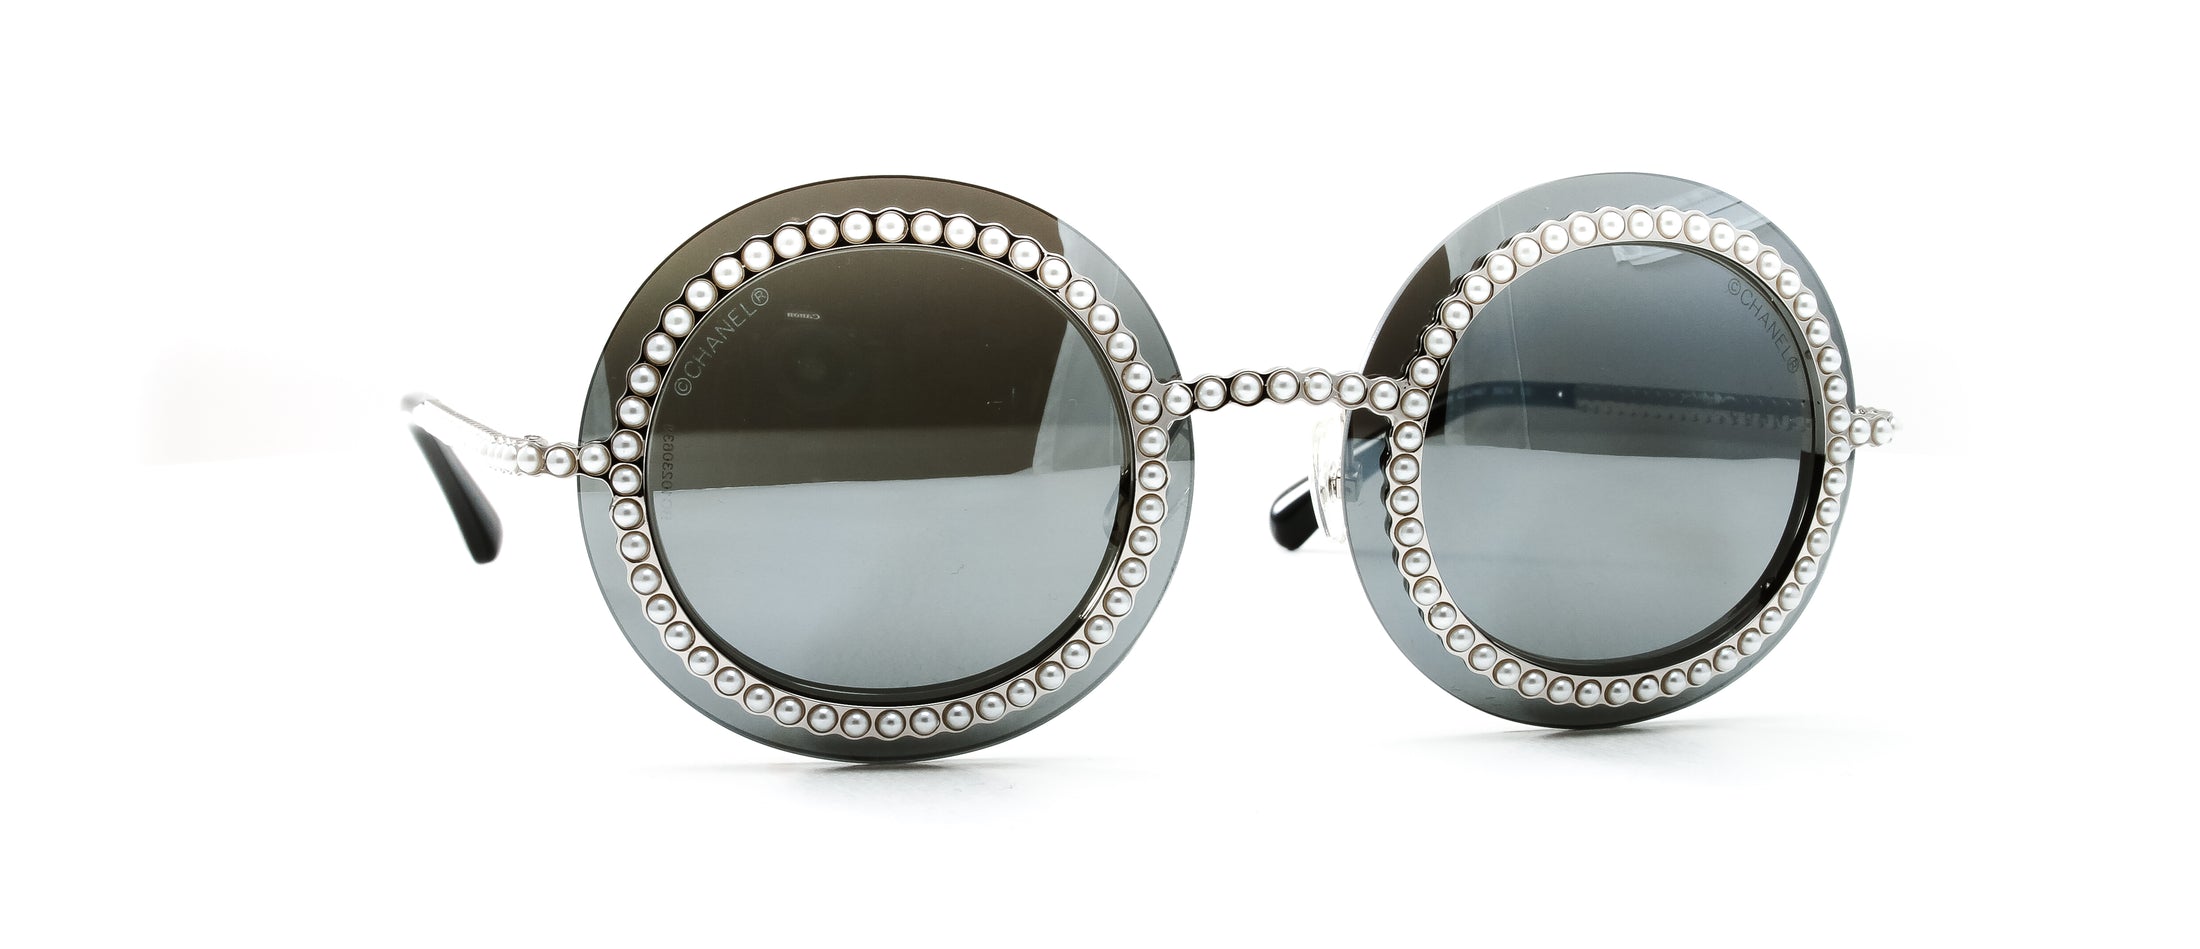 Chanel eyeglass case - Gem